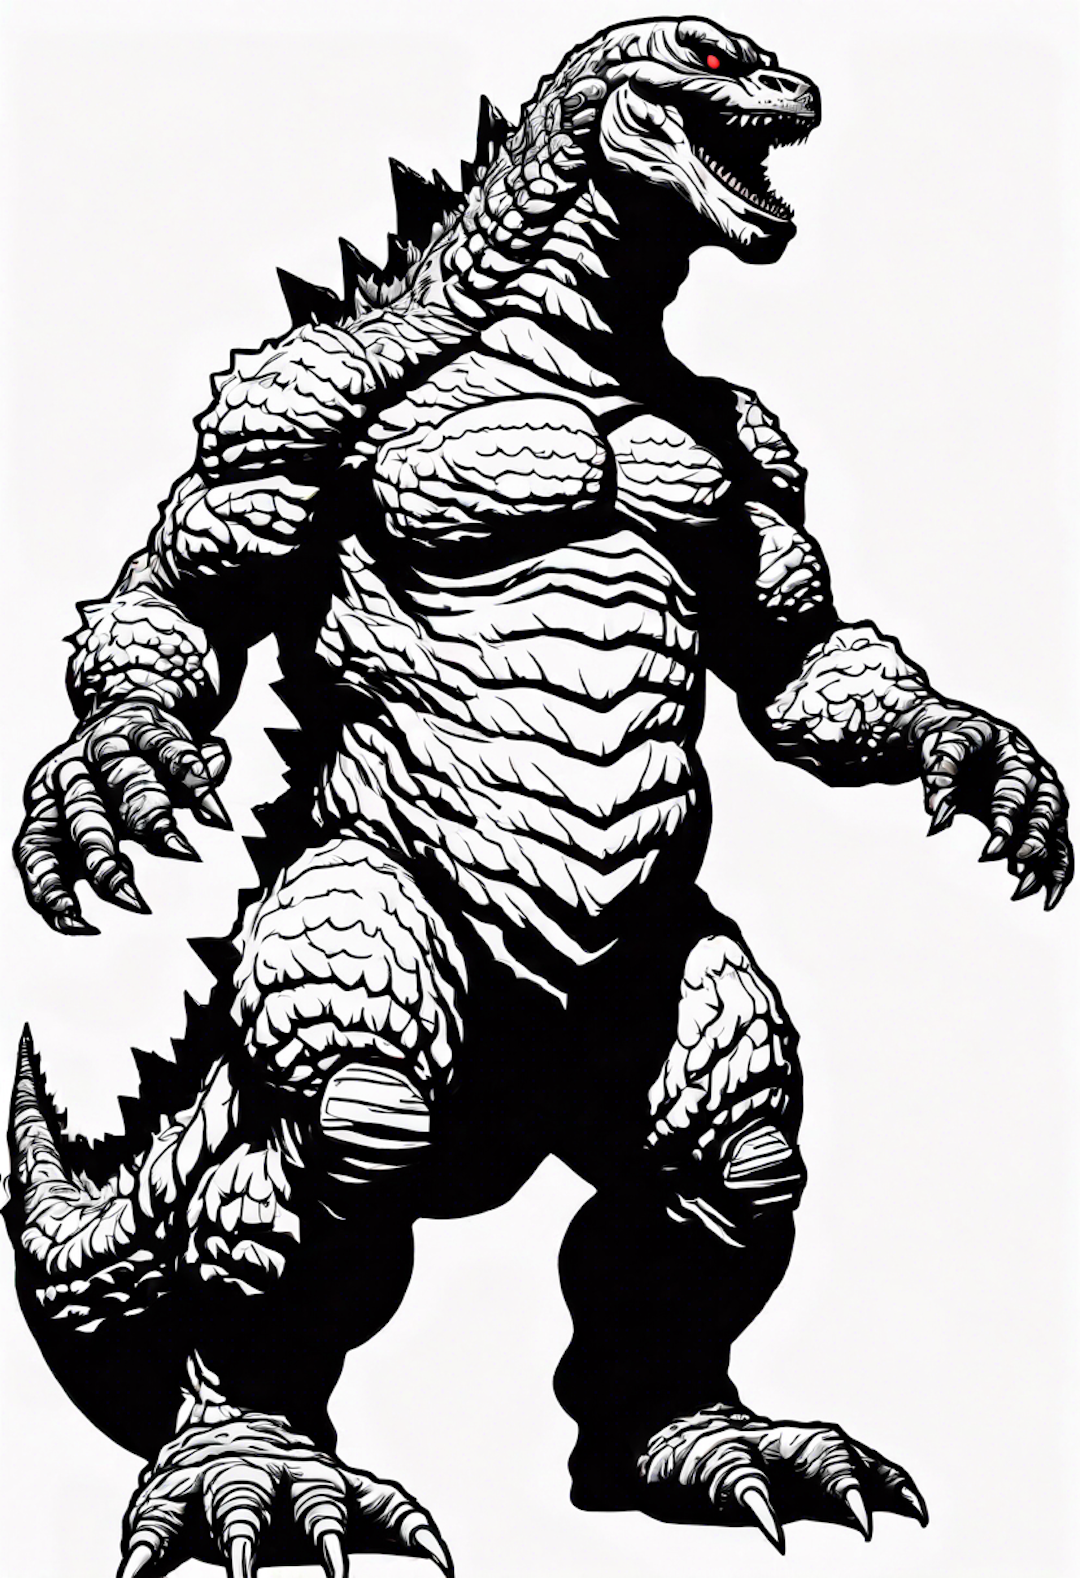 Godzilla, the atomic breath